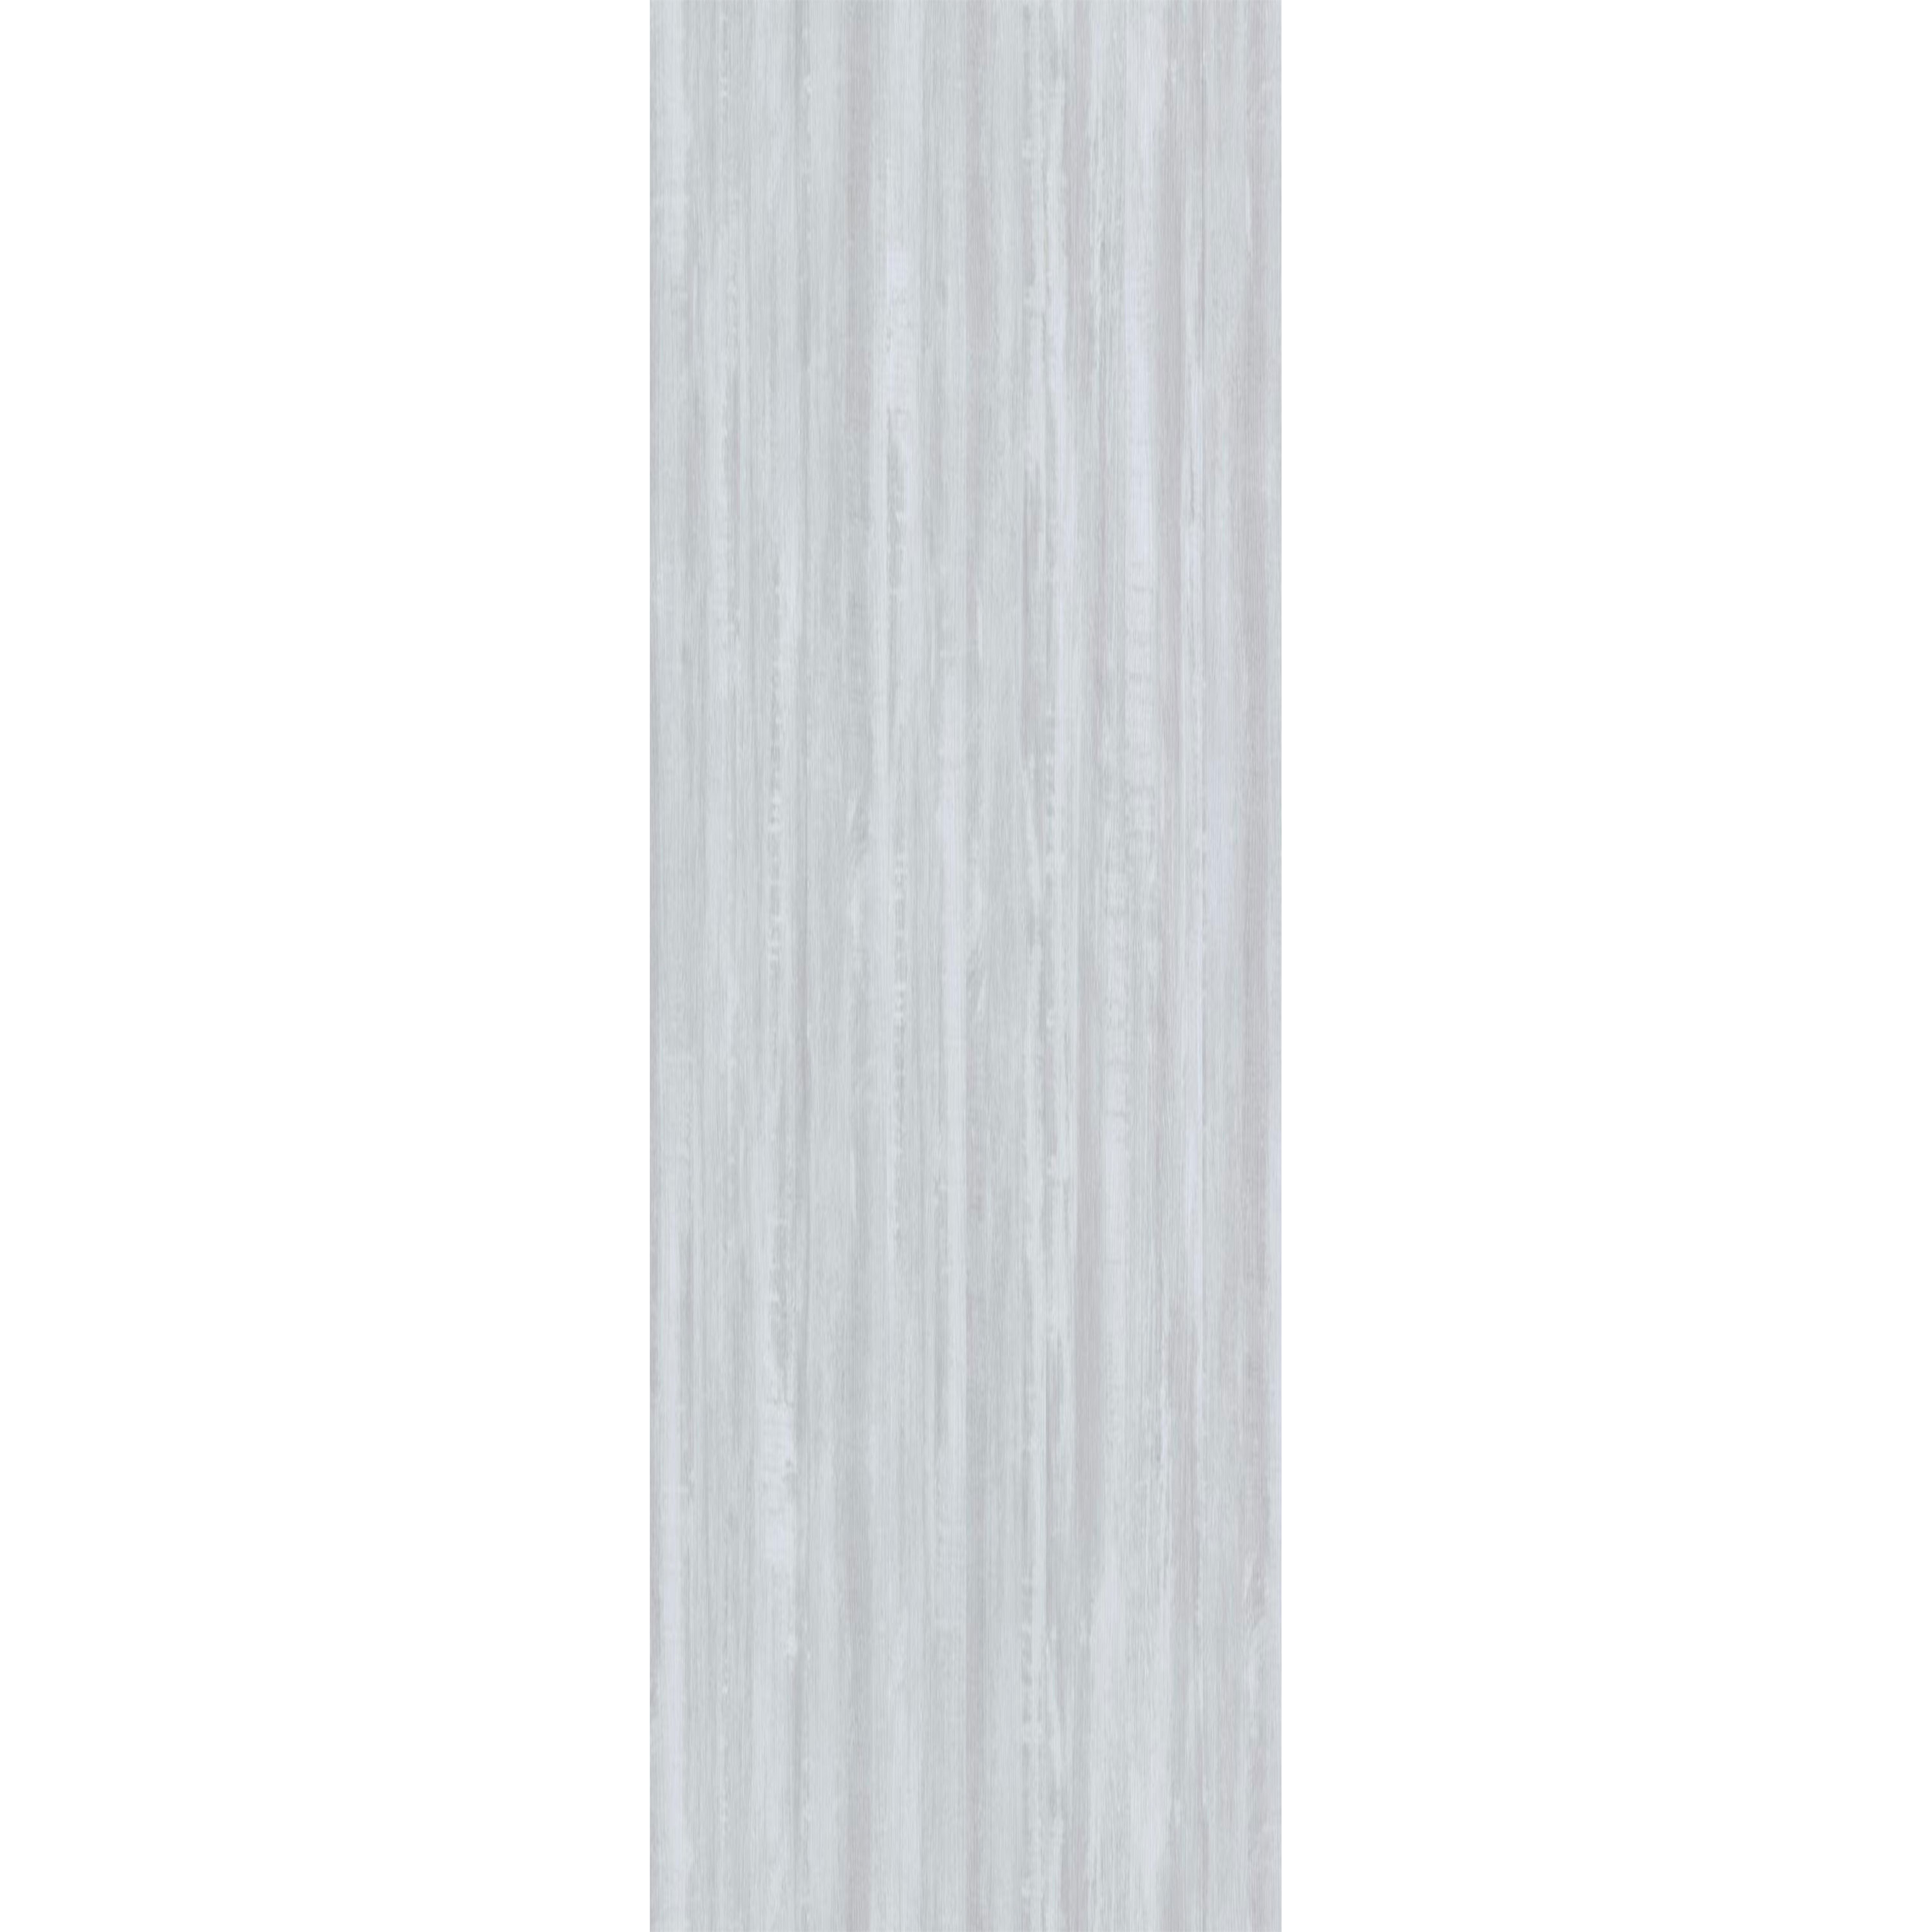 Vinyl Gulvfliser Klik System Snowwood Hvid 17,2x121cm